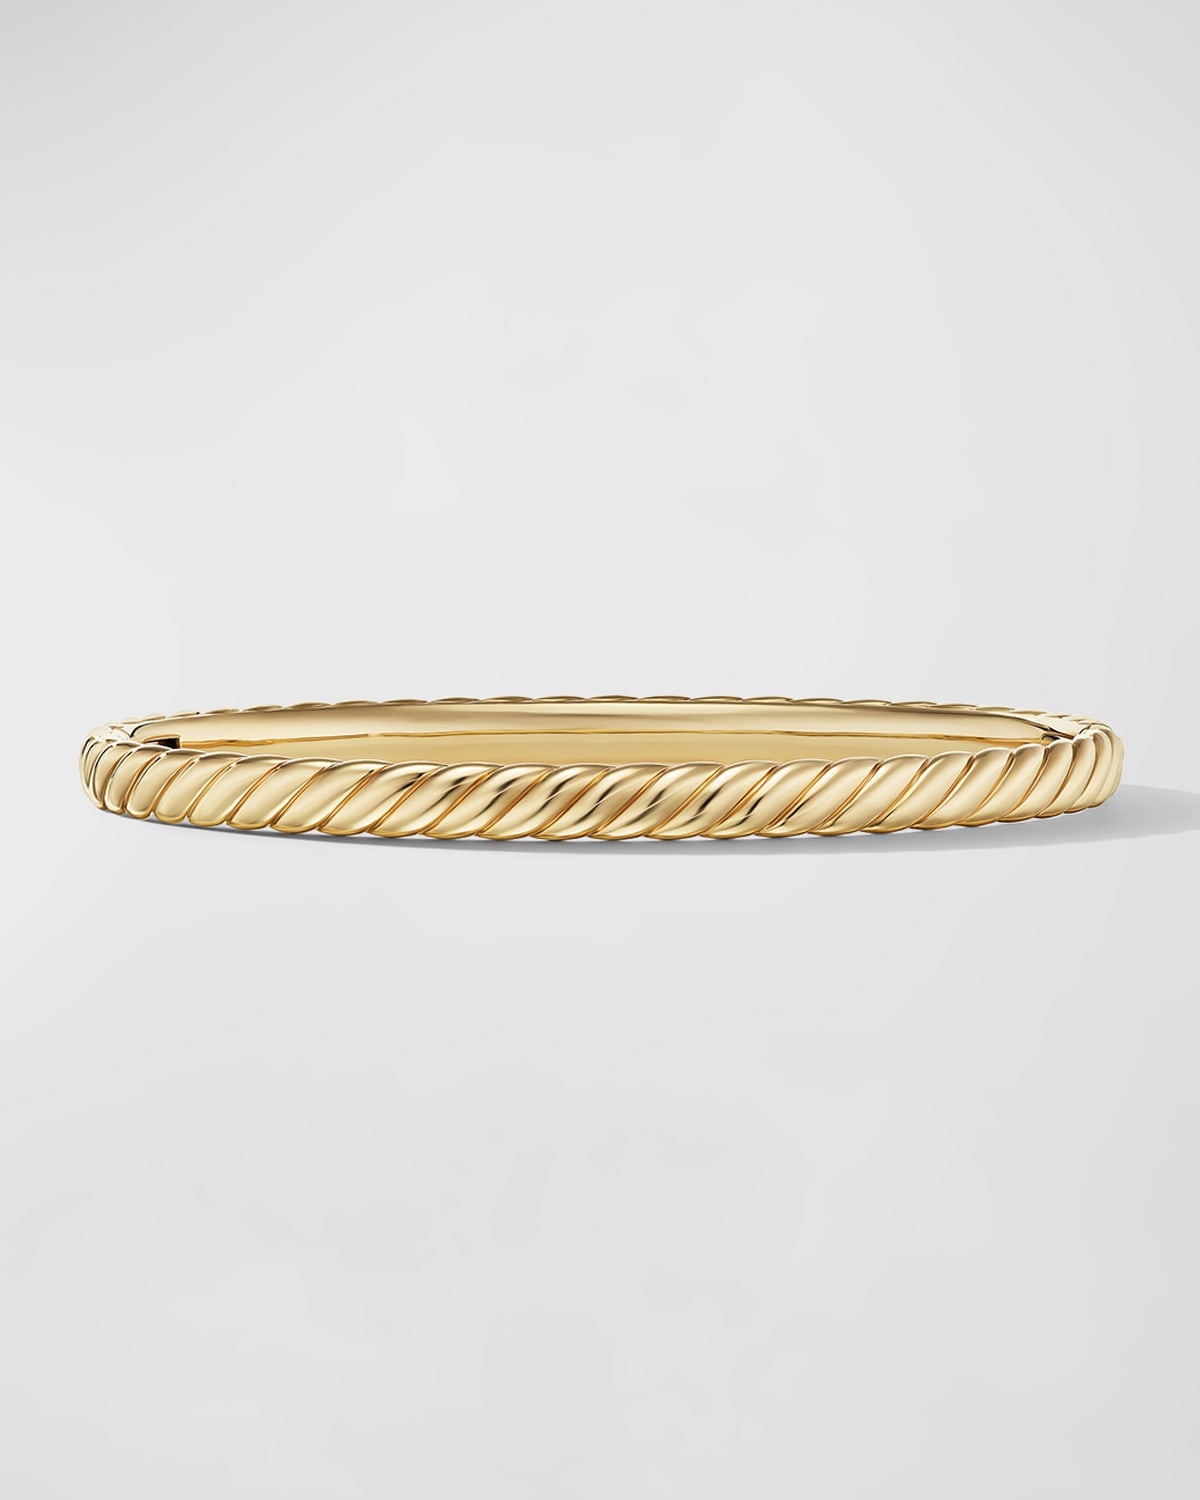 David Yurman Sculpted Cable Bracelet in 18K Gold, 4.5mm, Size L